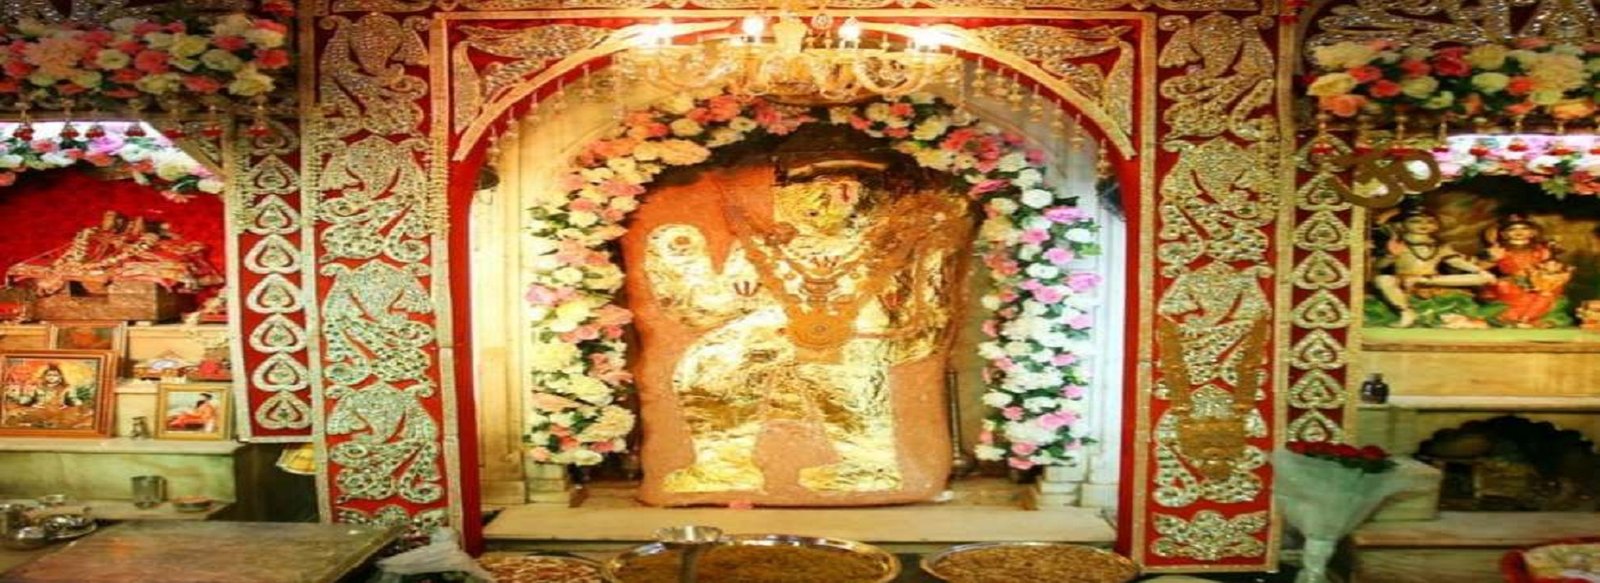 Mehandipur Balaji Temple Stories, Timings & Facts